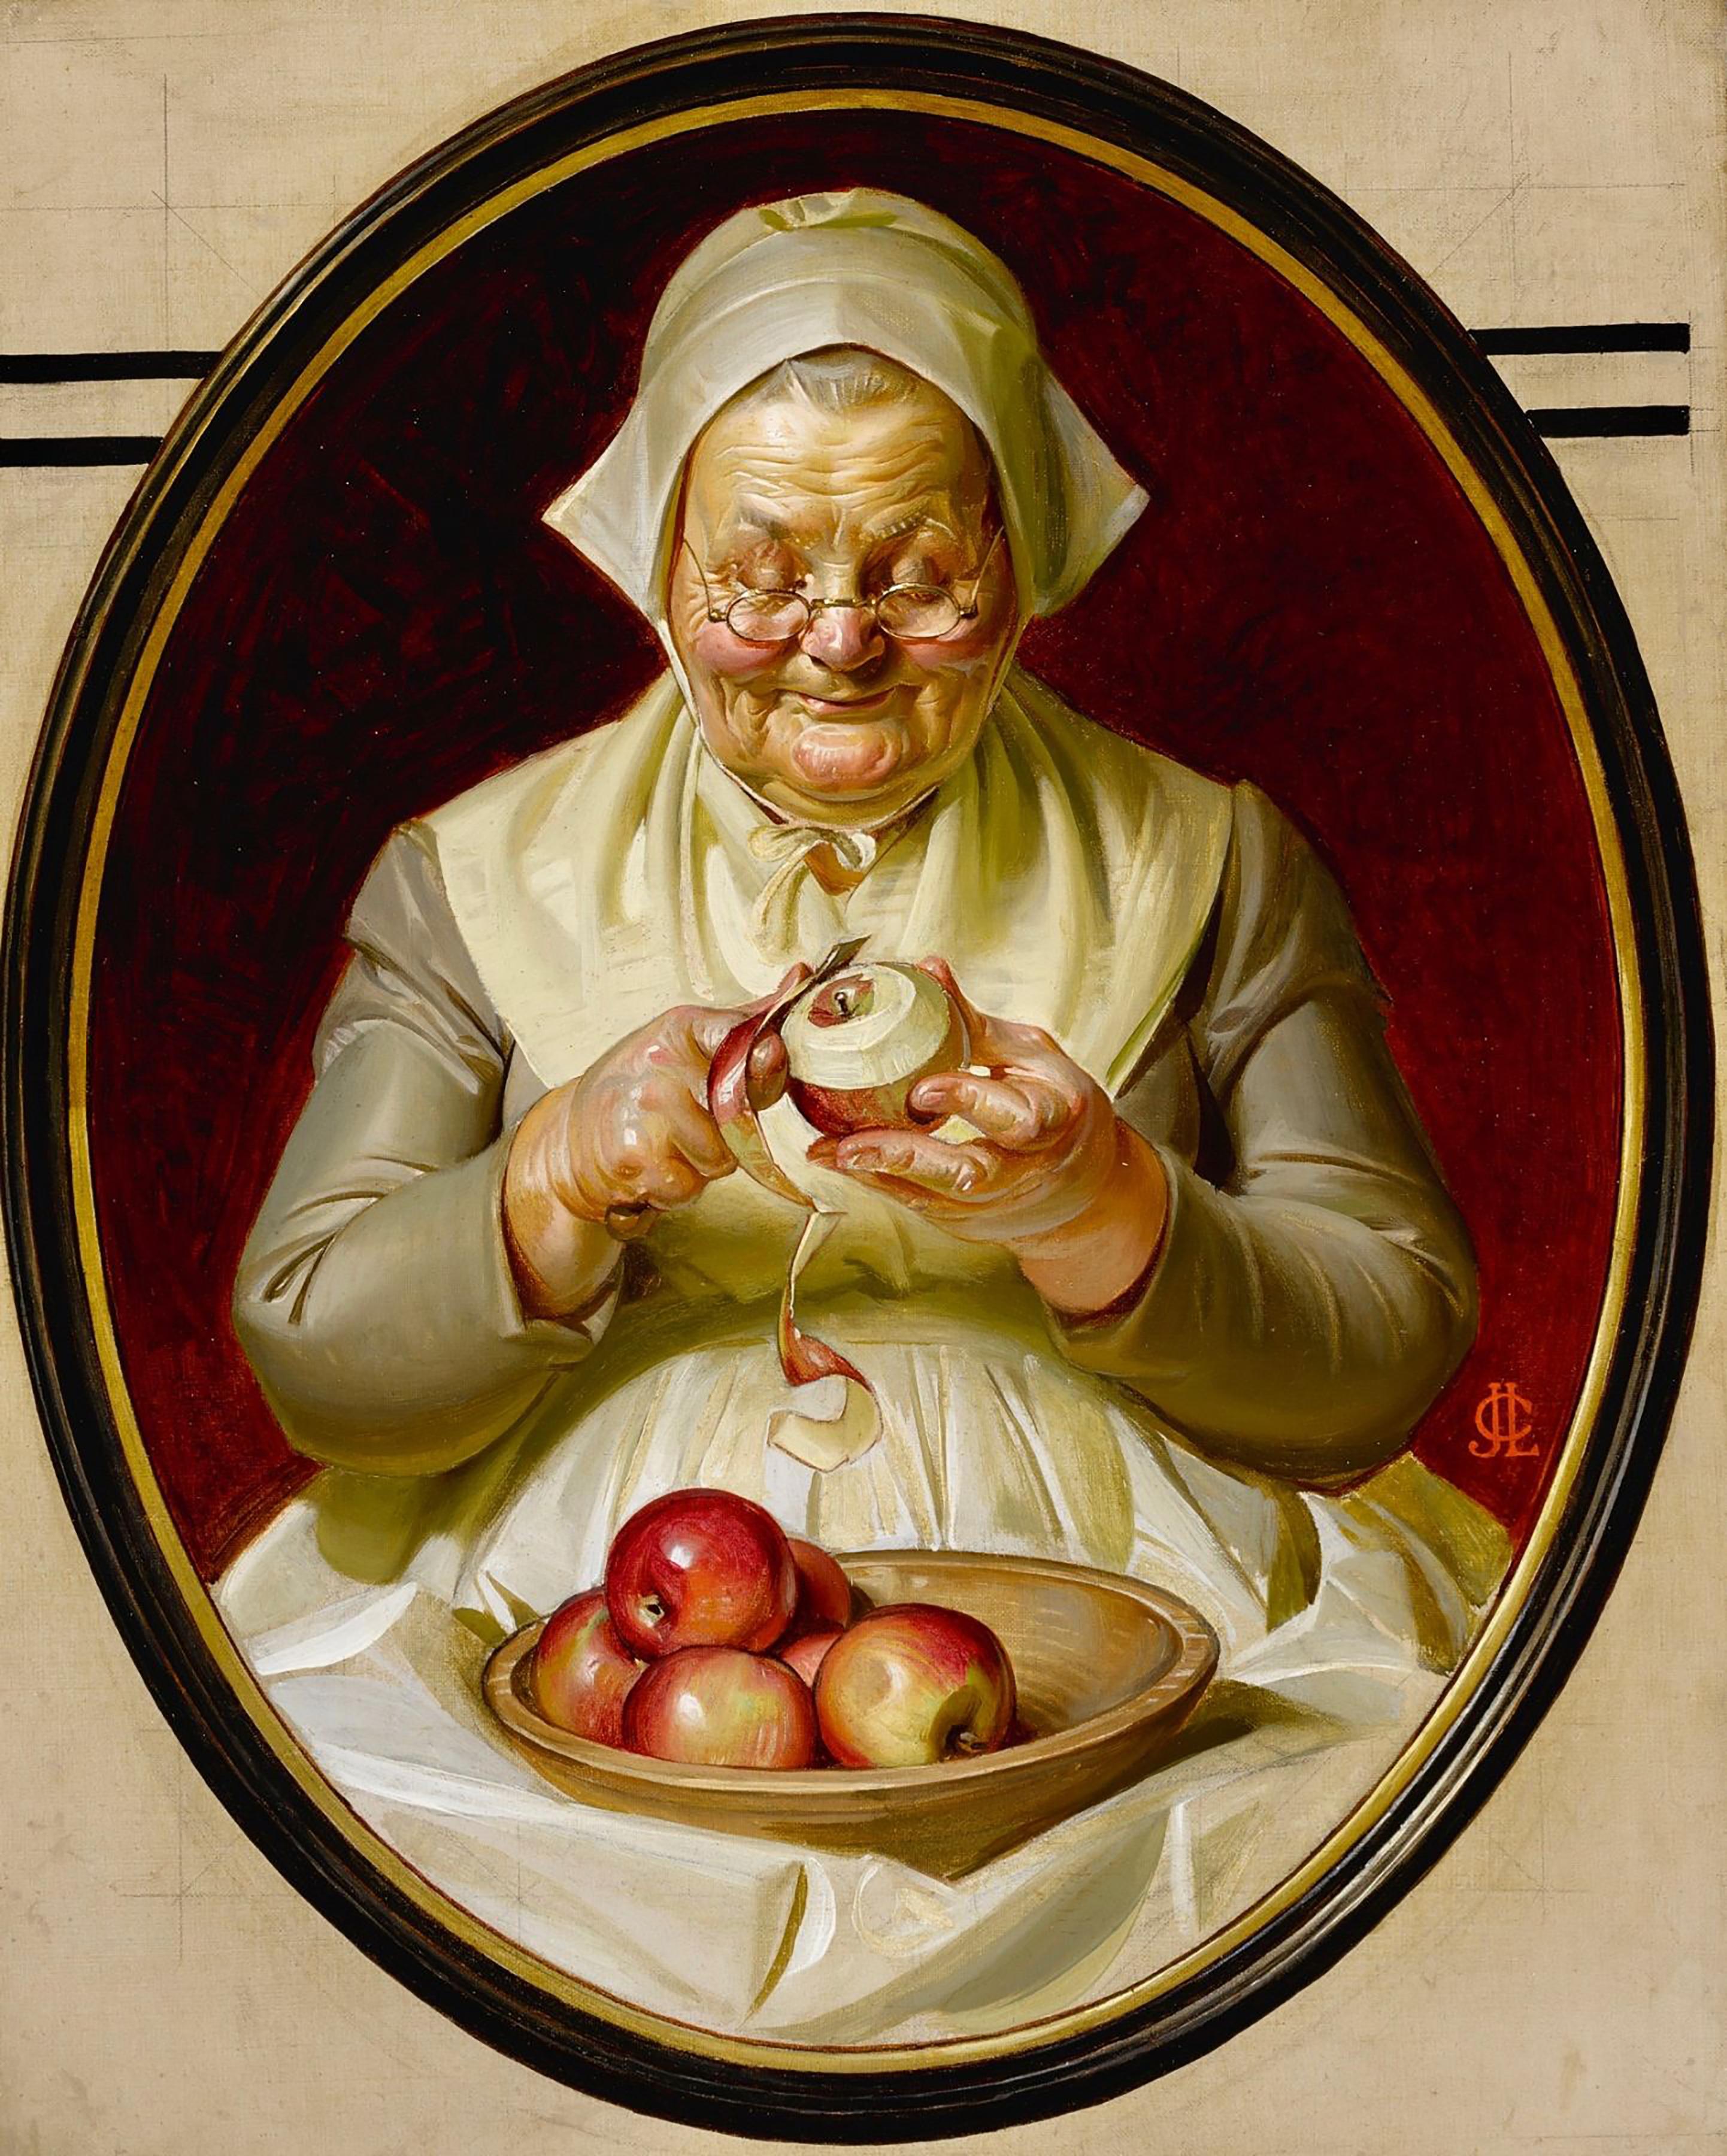 Joseph Christian Leyendecker Figurative Painting - Peeling Apples, Thanksgiving Saturday Evening Post Cover, 1925